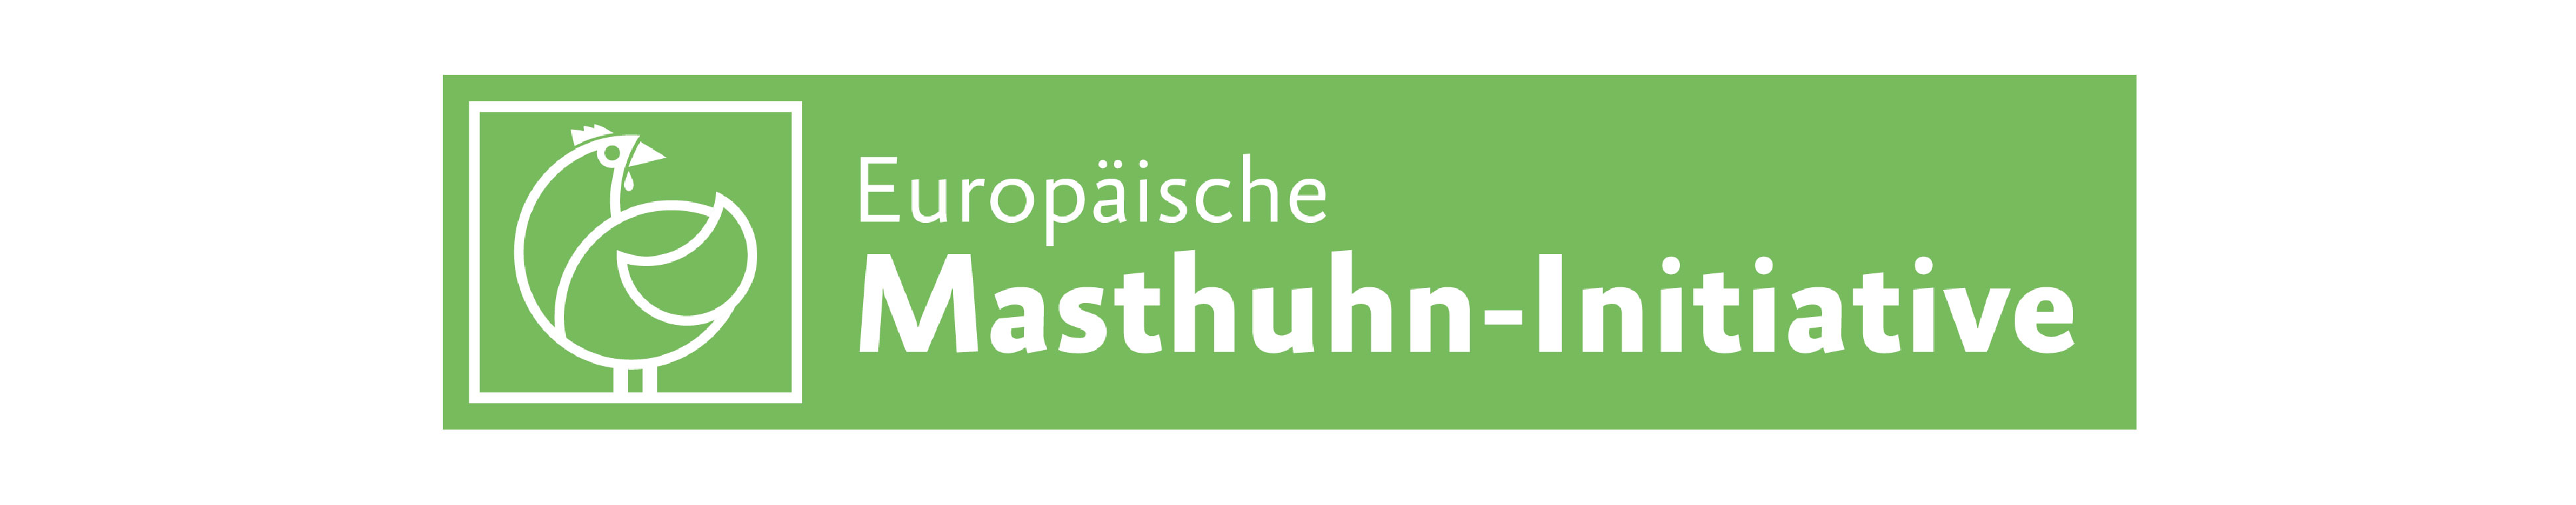 Europäische Masthuhn-Initiative